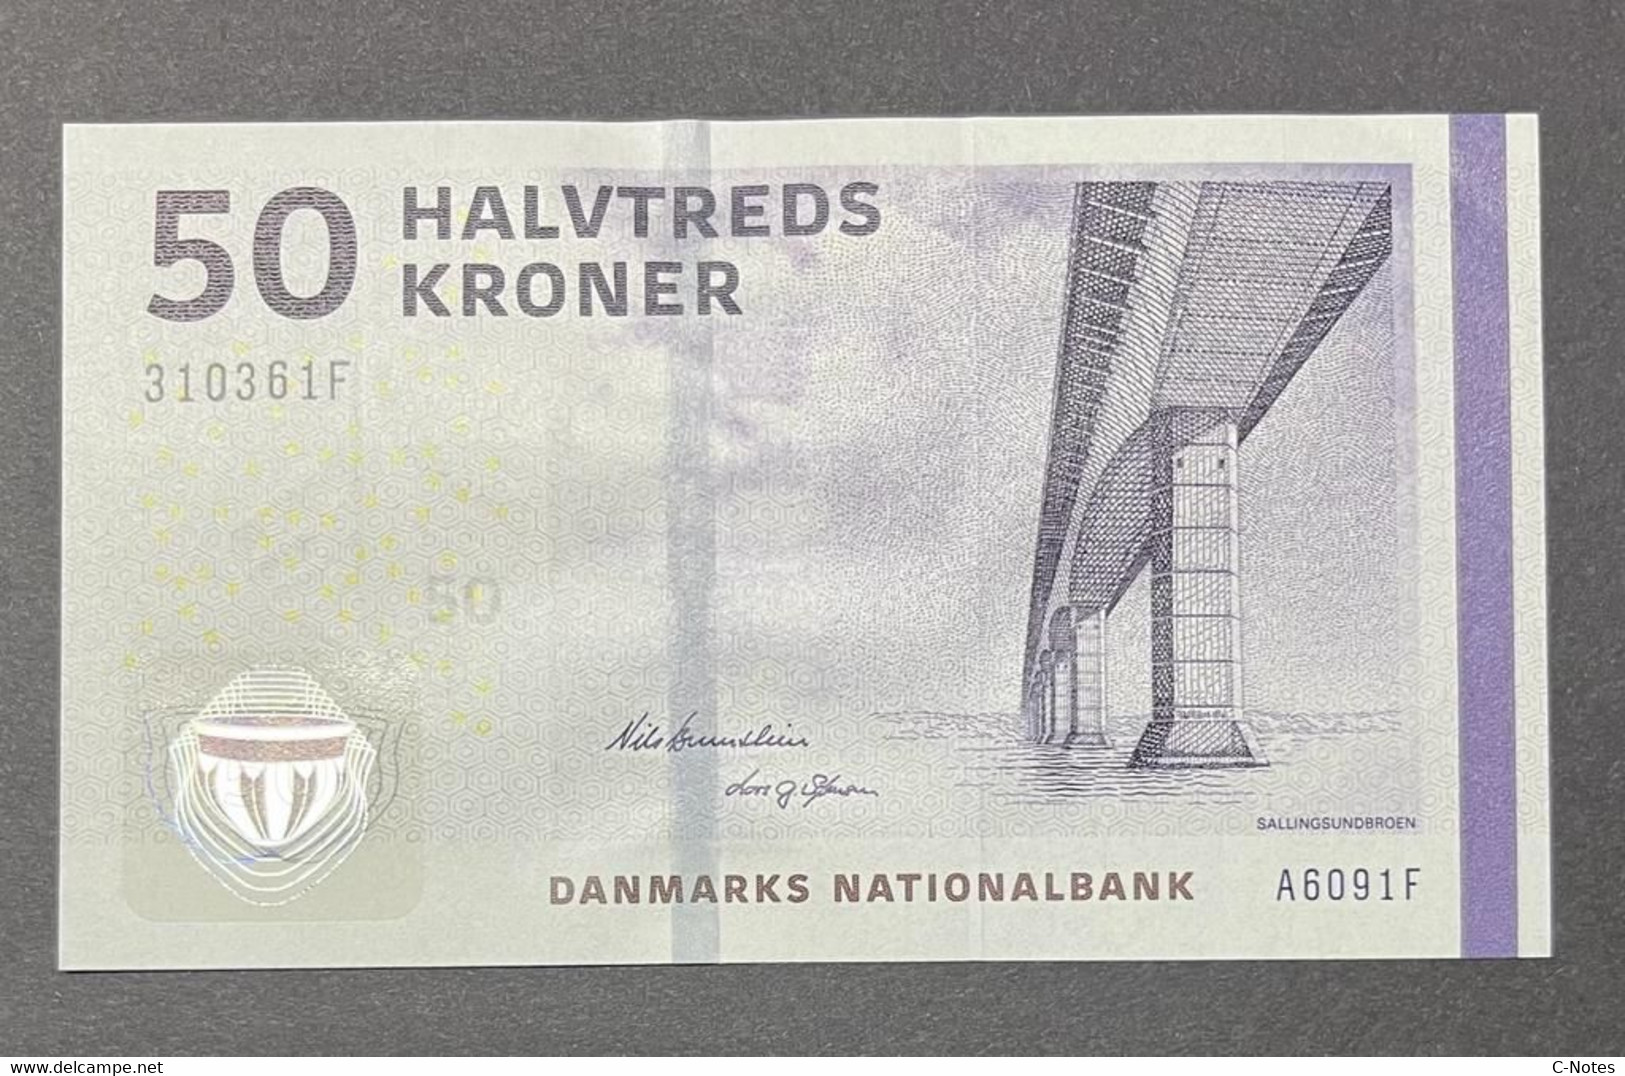 DENMARK - P.65a – 50 Kroner 2009 UNC, Serie A6091F 310361F - Dinamarca